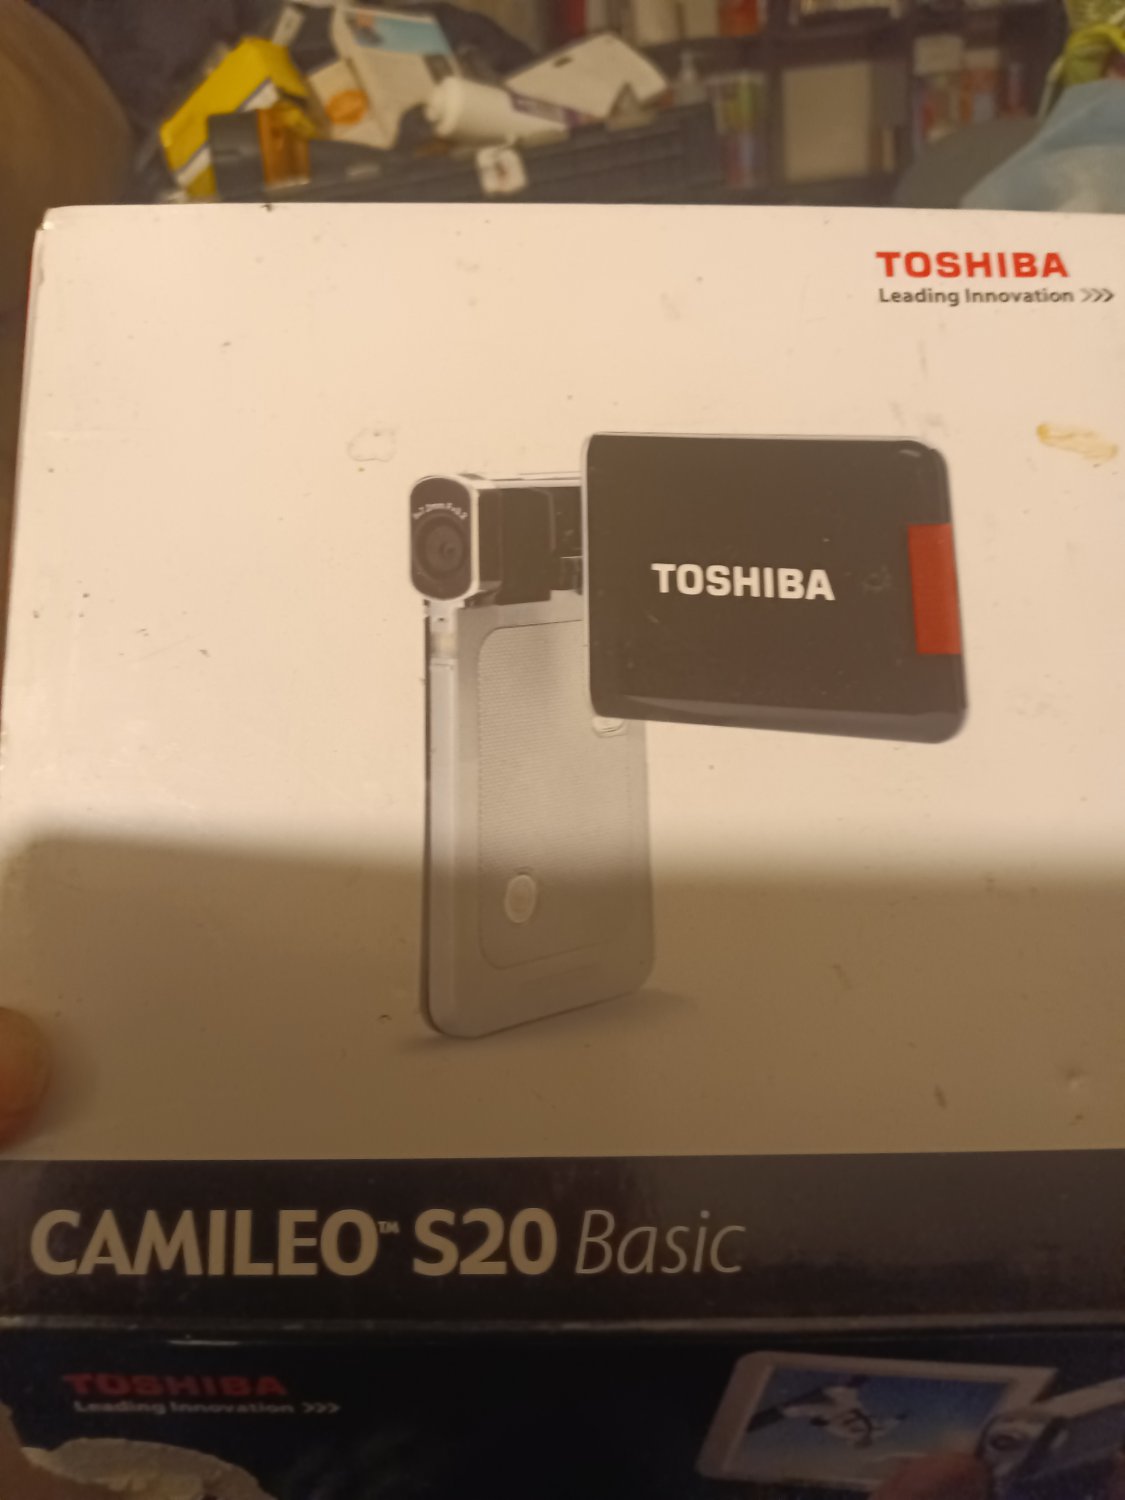 Toshiba YouTube Ready camcorder